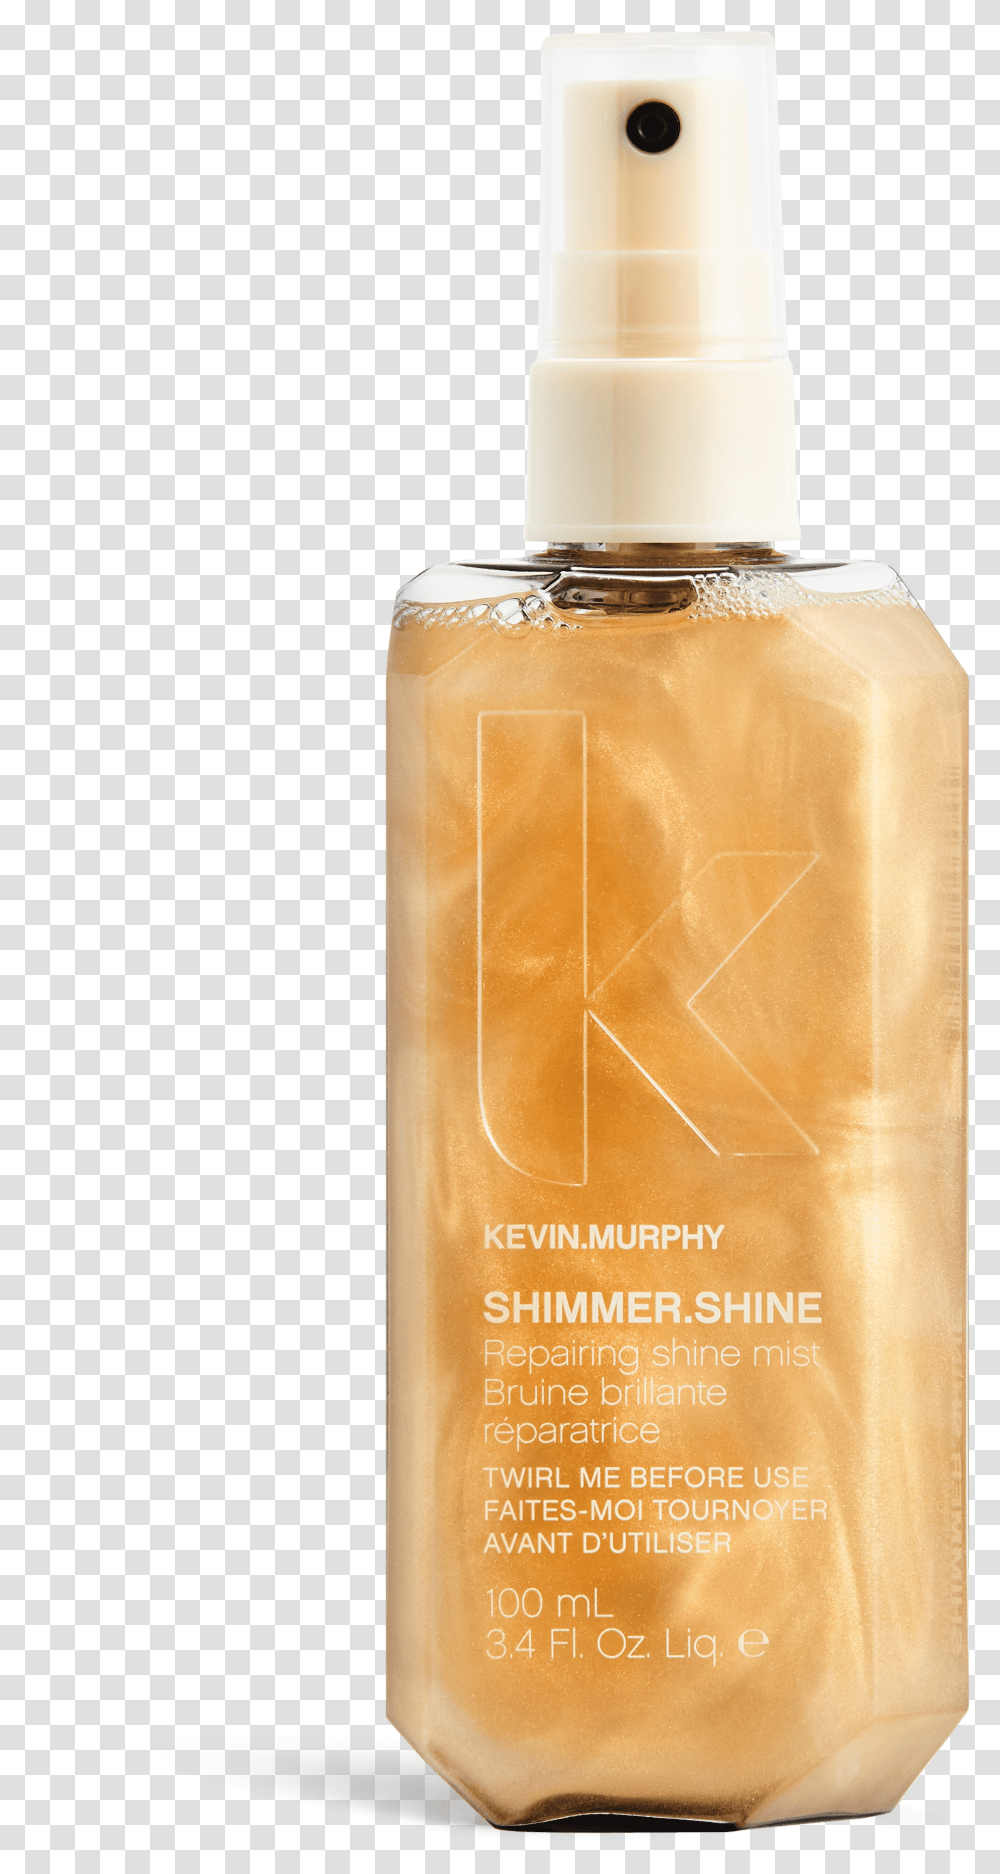 Kevin Murphy Shimmer Shine Kaina, Bottle, Cosmetics, Shampoo, Perfume Transparent Png